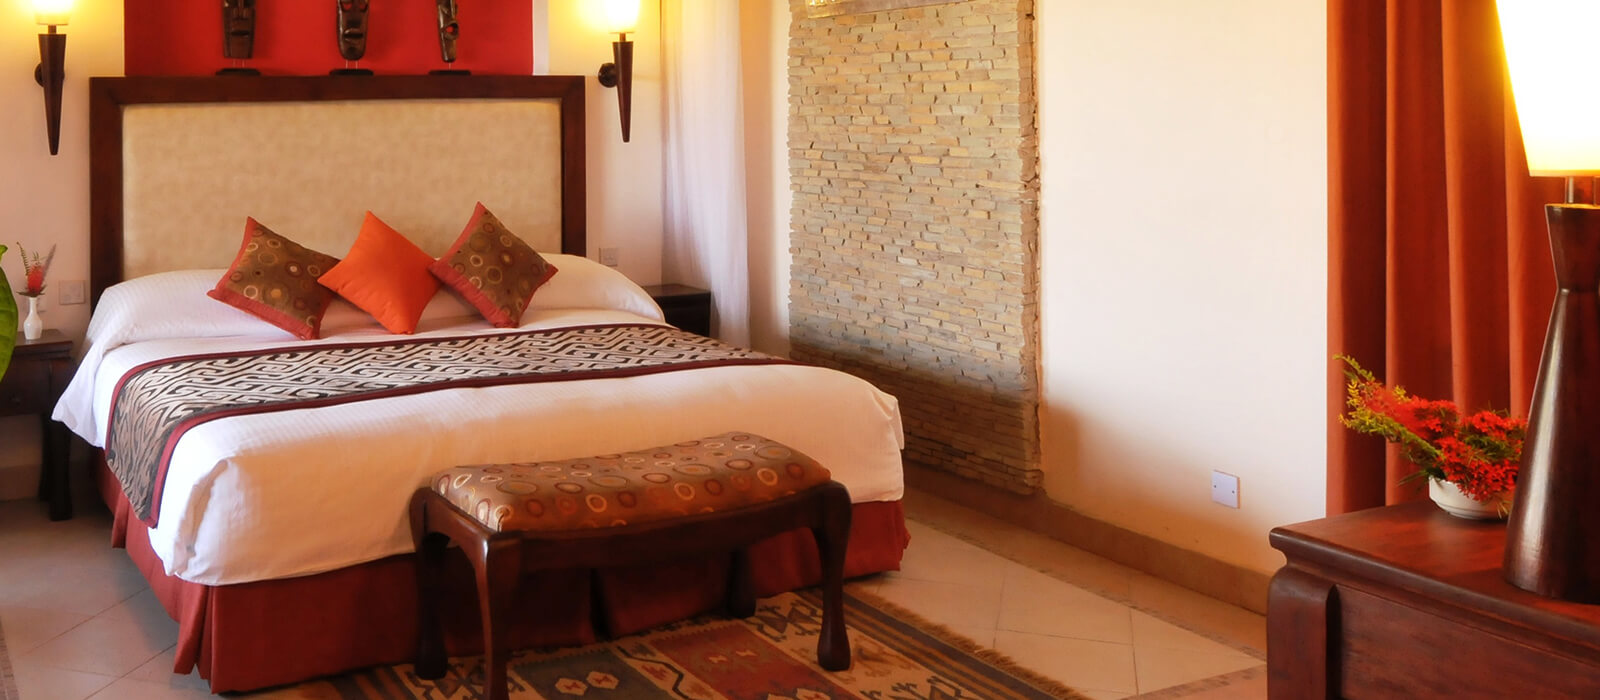 Luxury accommodation in Amboseli National park